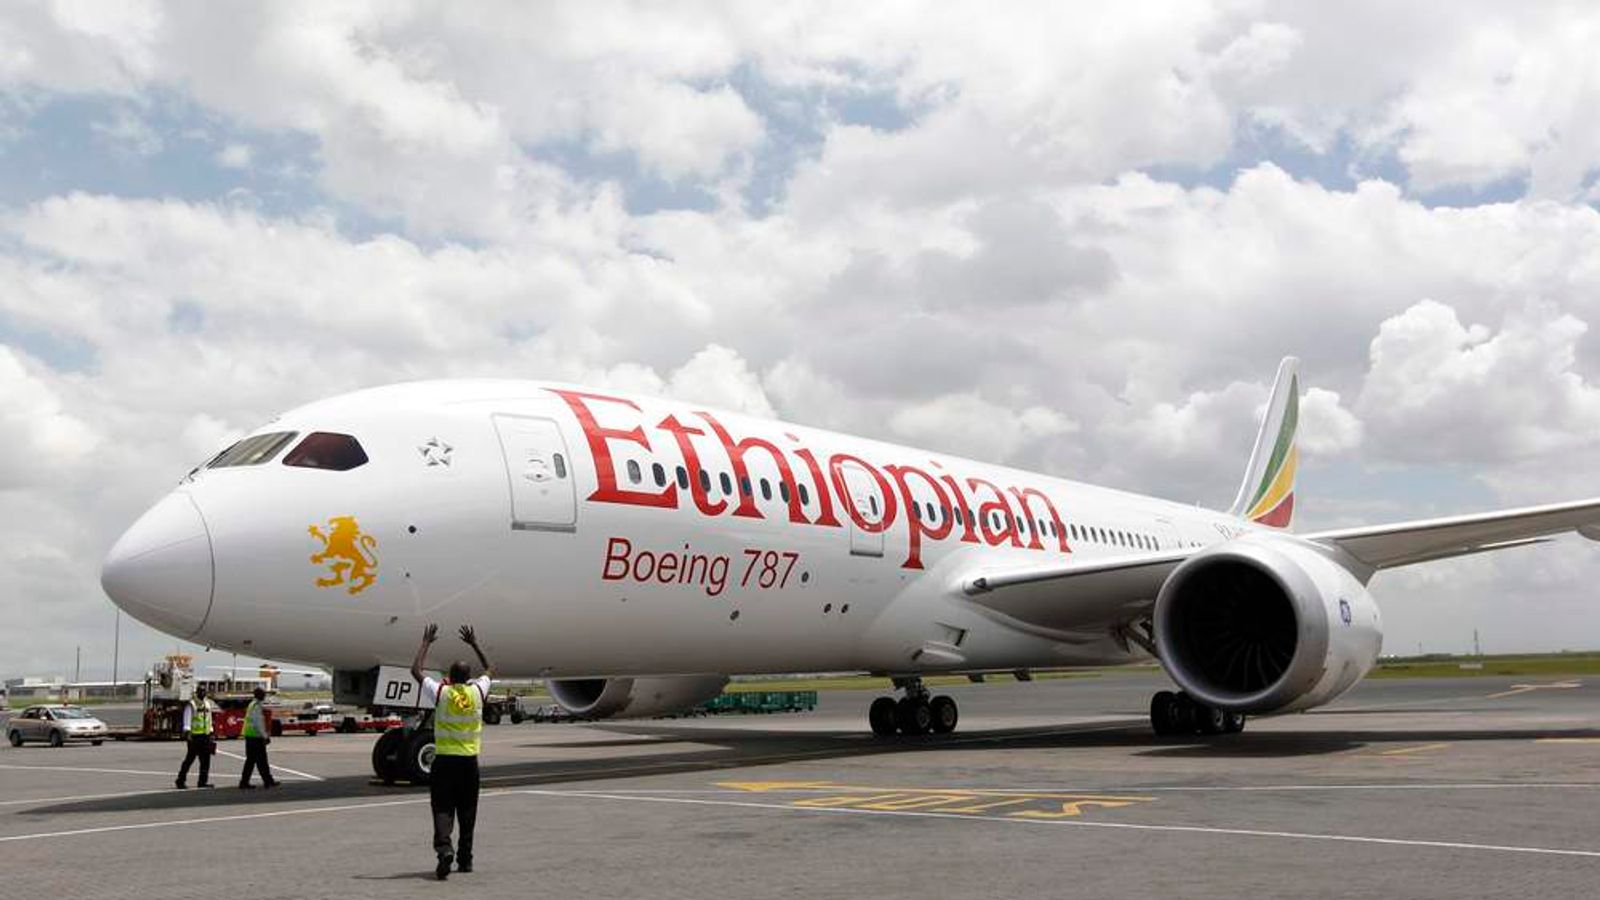 Boeing 787 ethiopian airlines. Boeing 787 эфиопские авиалинии. Боинг 787 Ethiopian. Boeing 787-800 Dreamliner Ethiopian. Ethiopian Airlines 787.